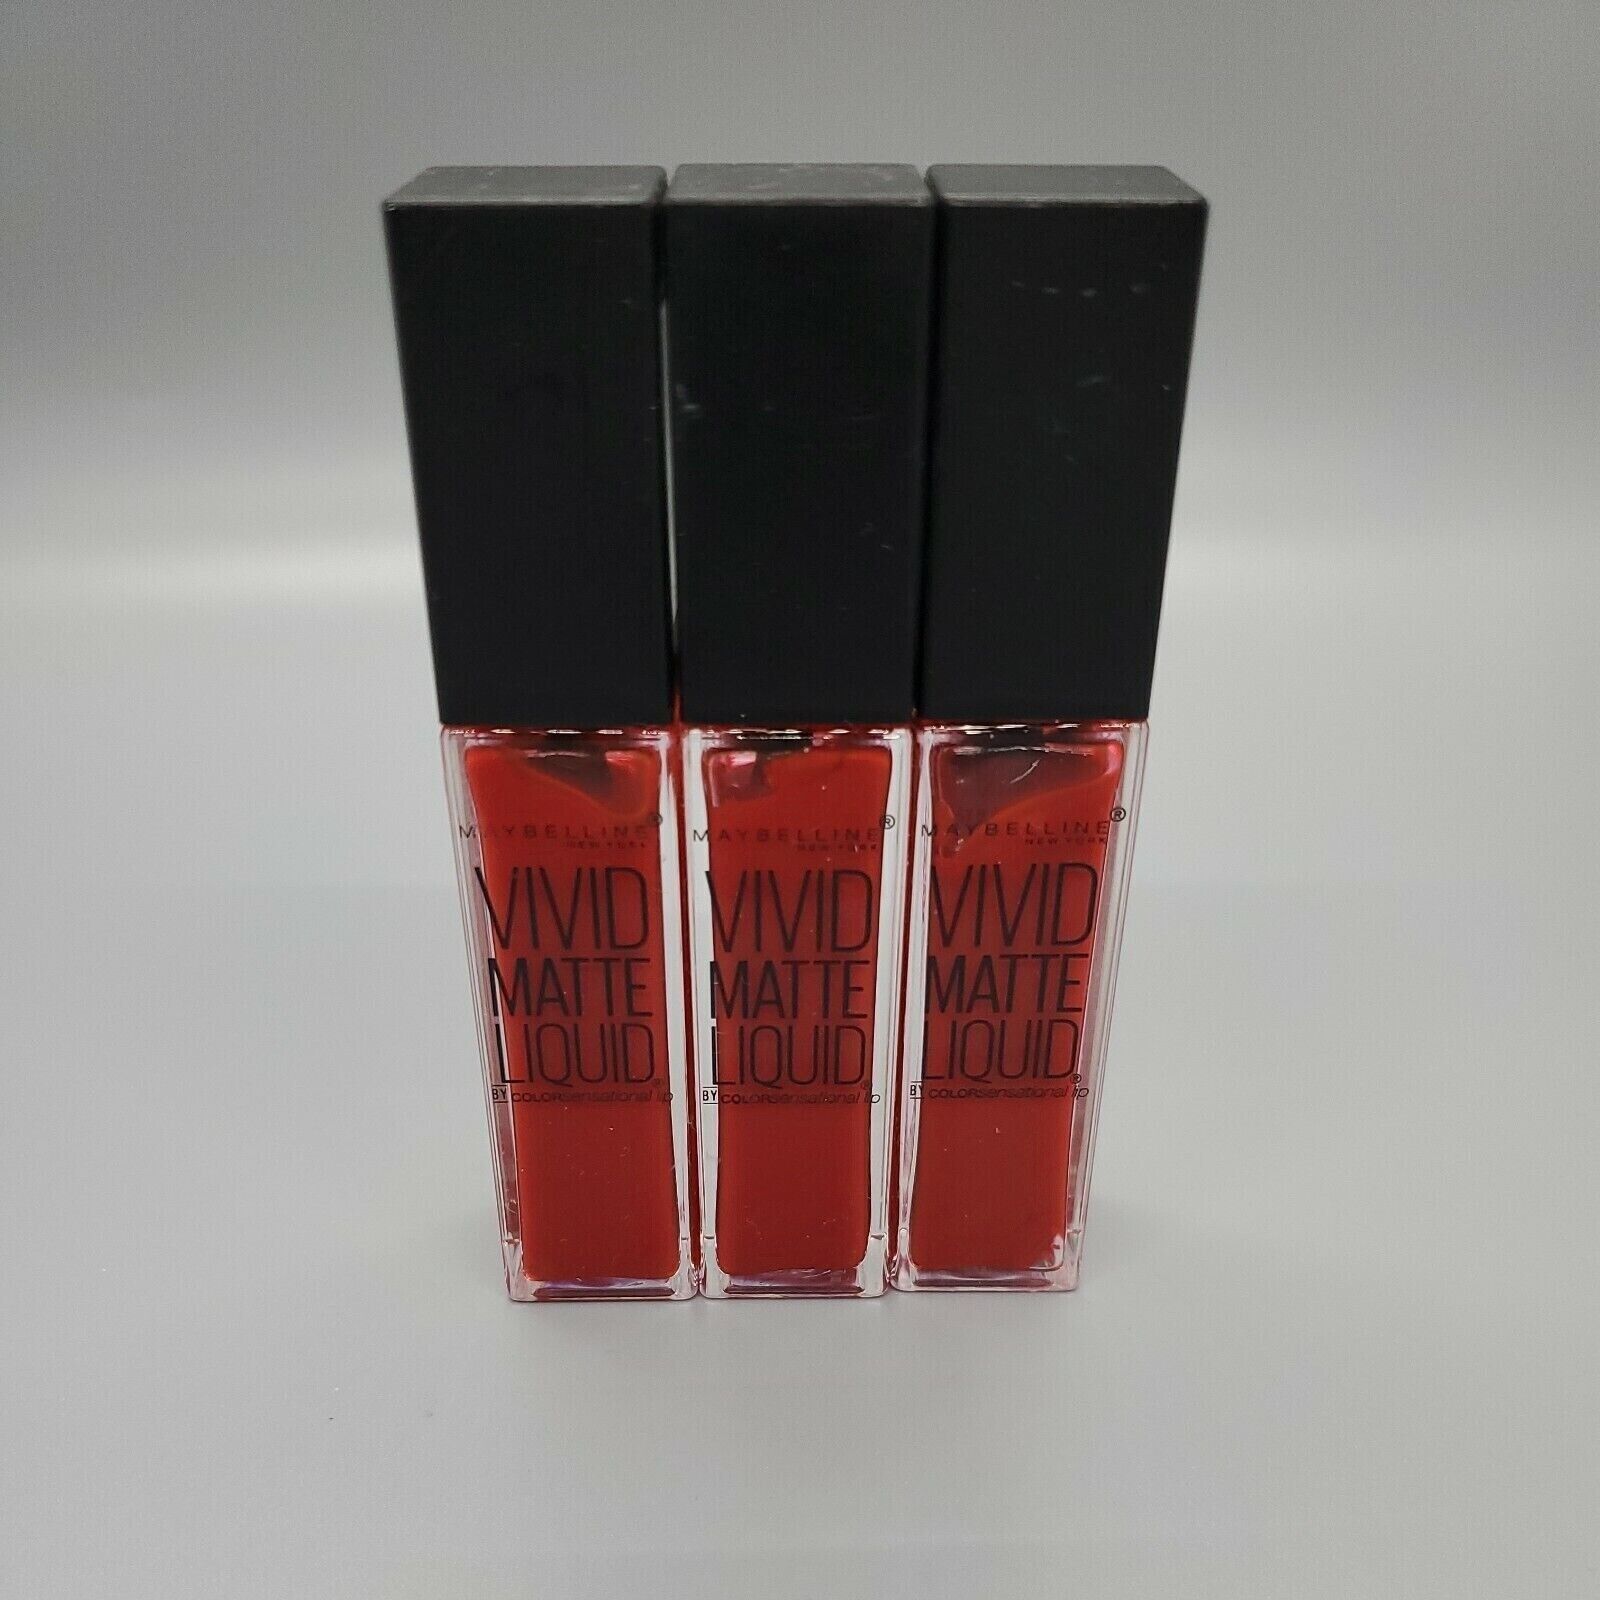 3 MAYBELLINE Vivid Matte Liquid Lip Color #35 Rebel Red - $8.79